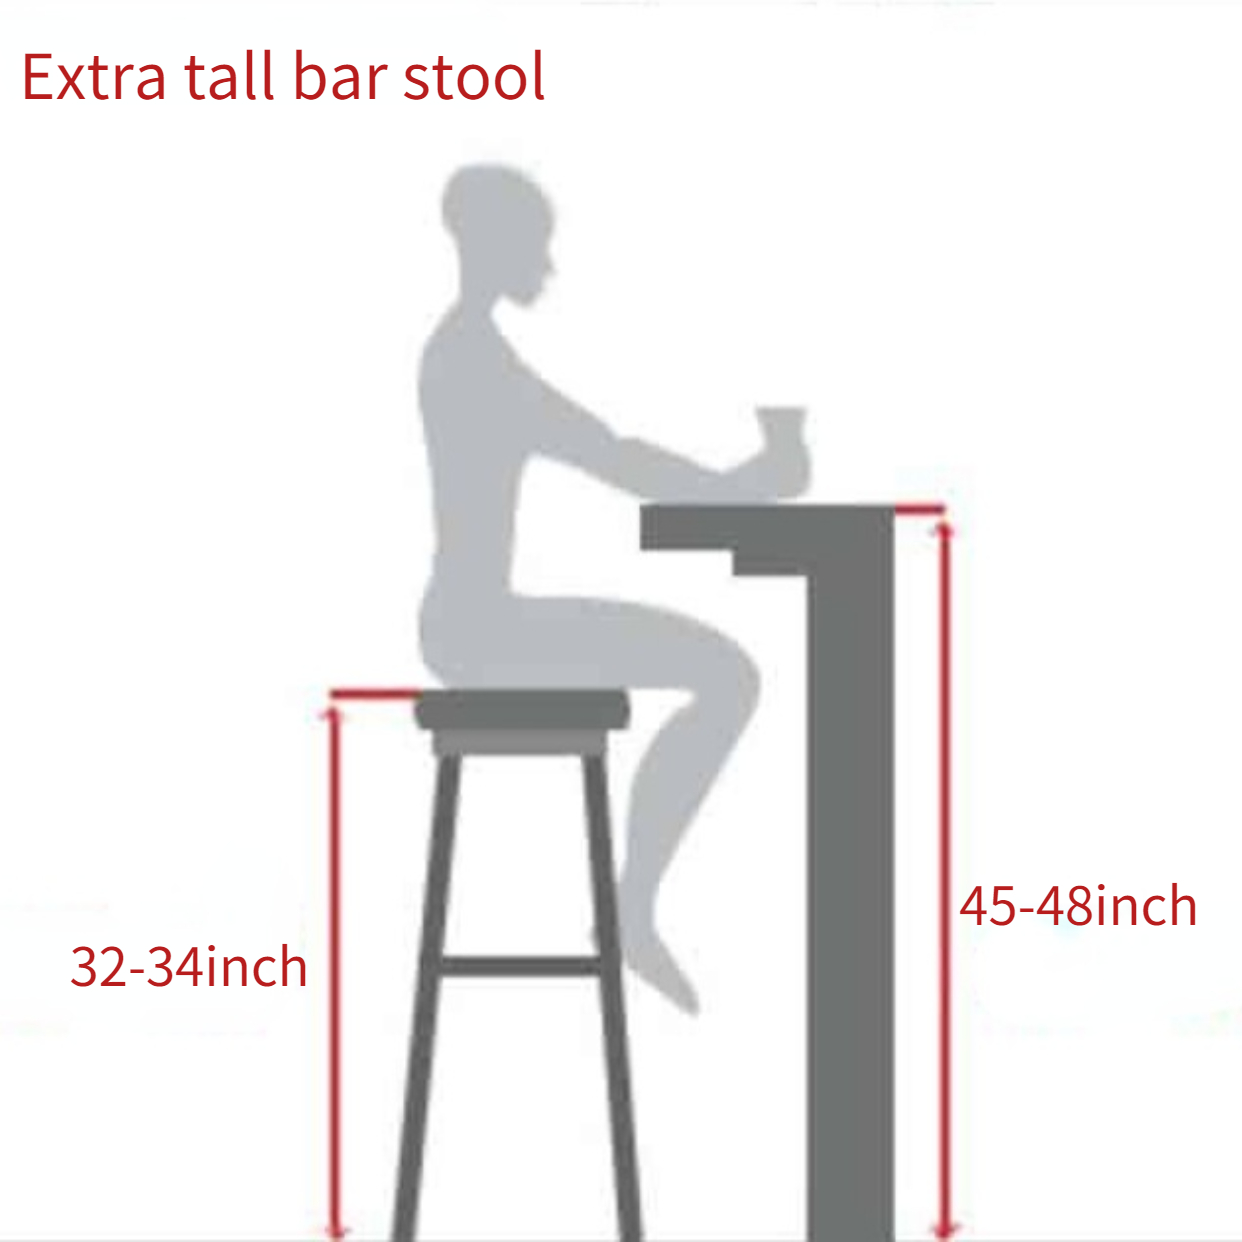 extral tall bar stool